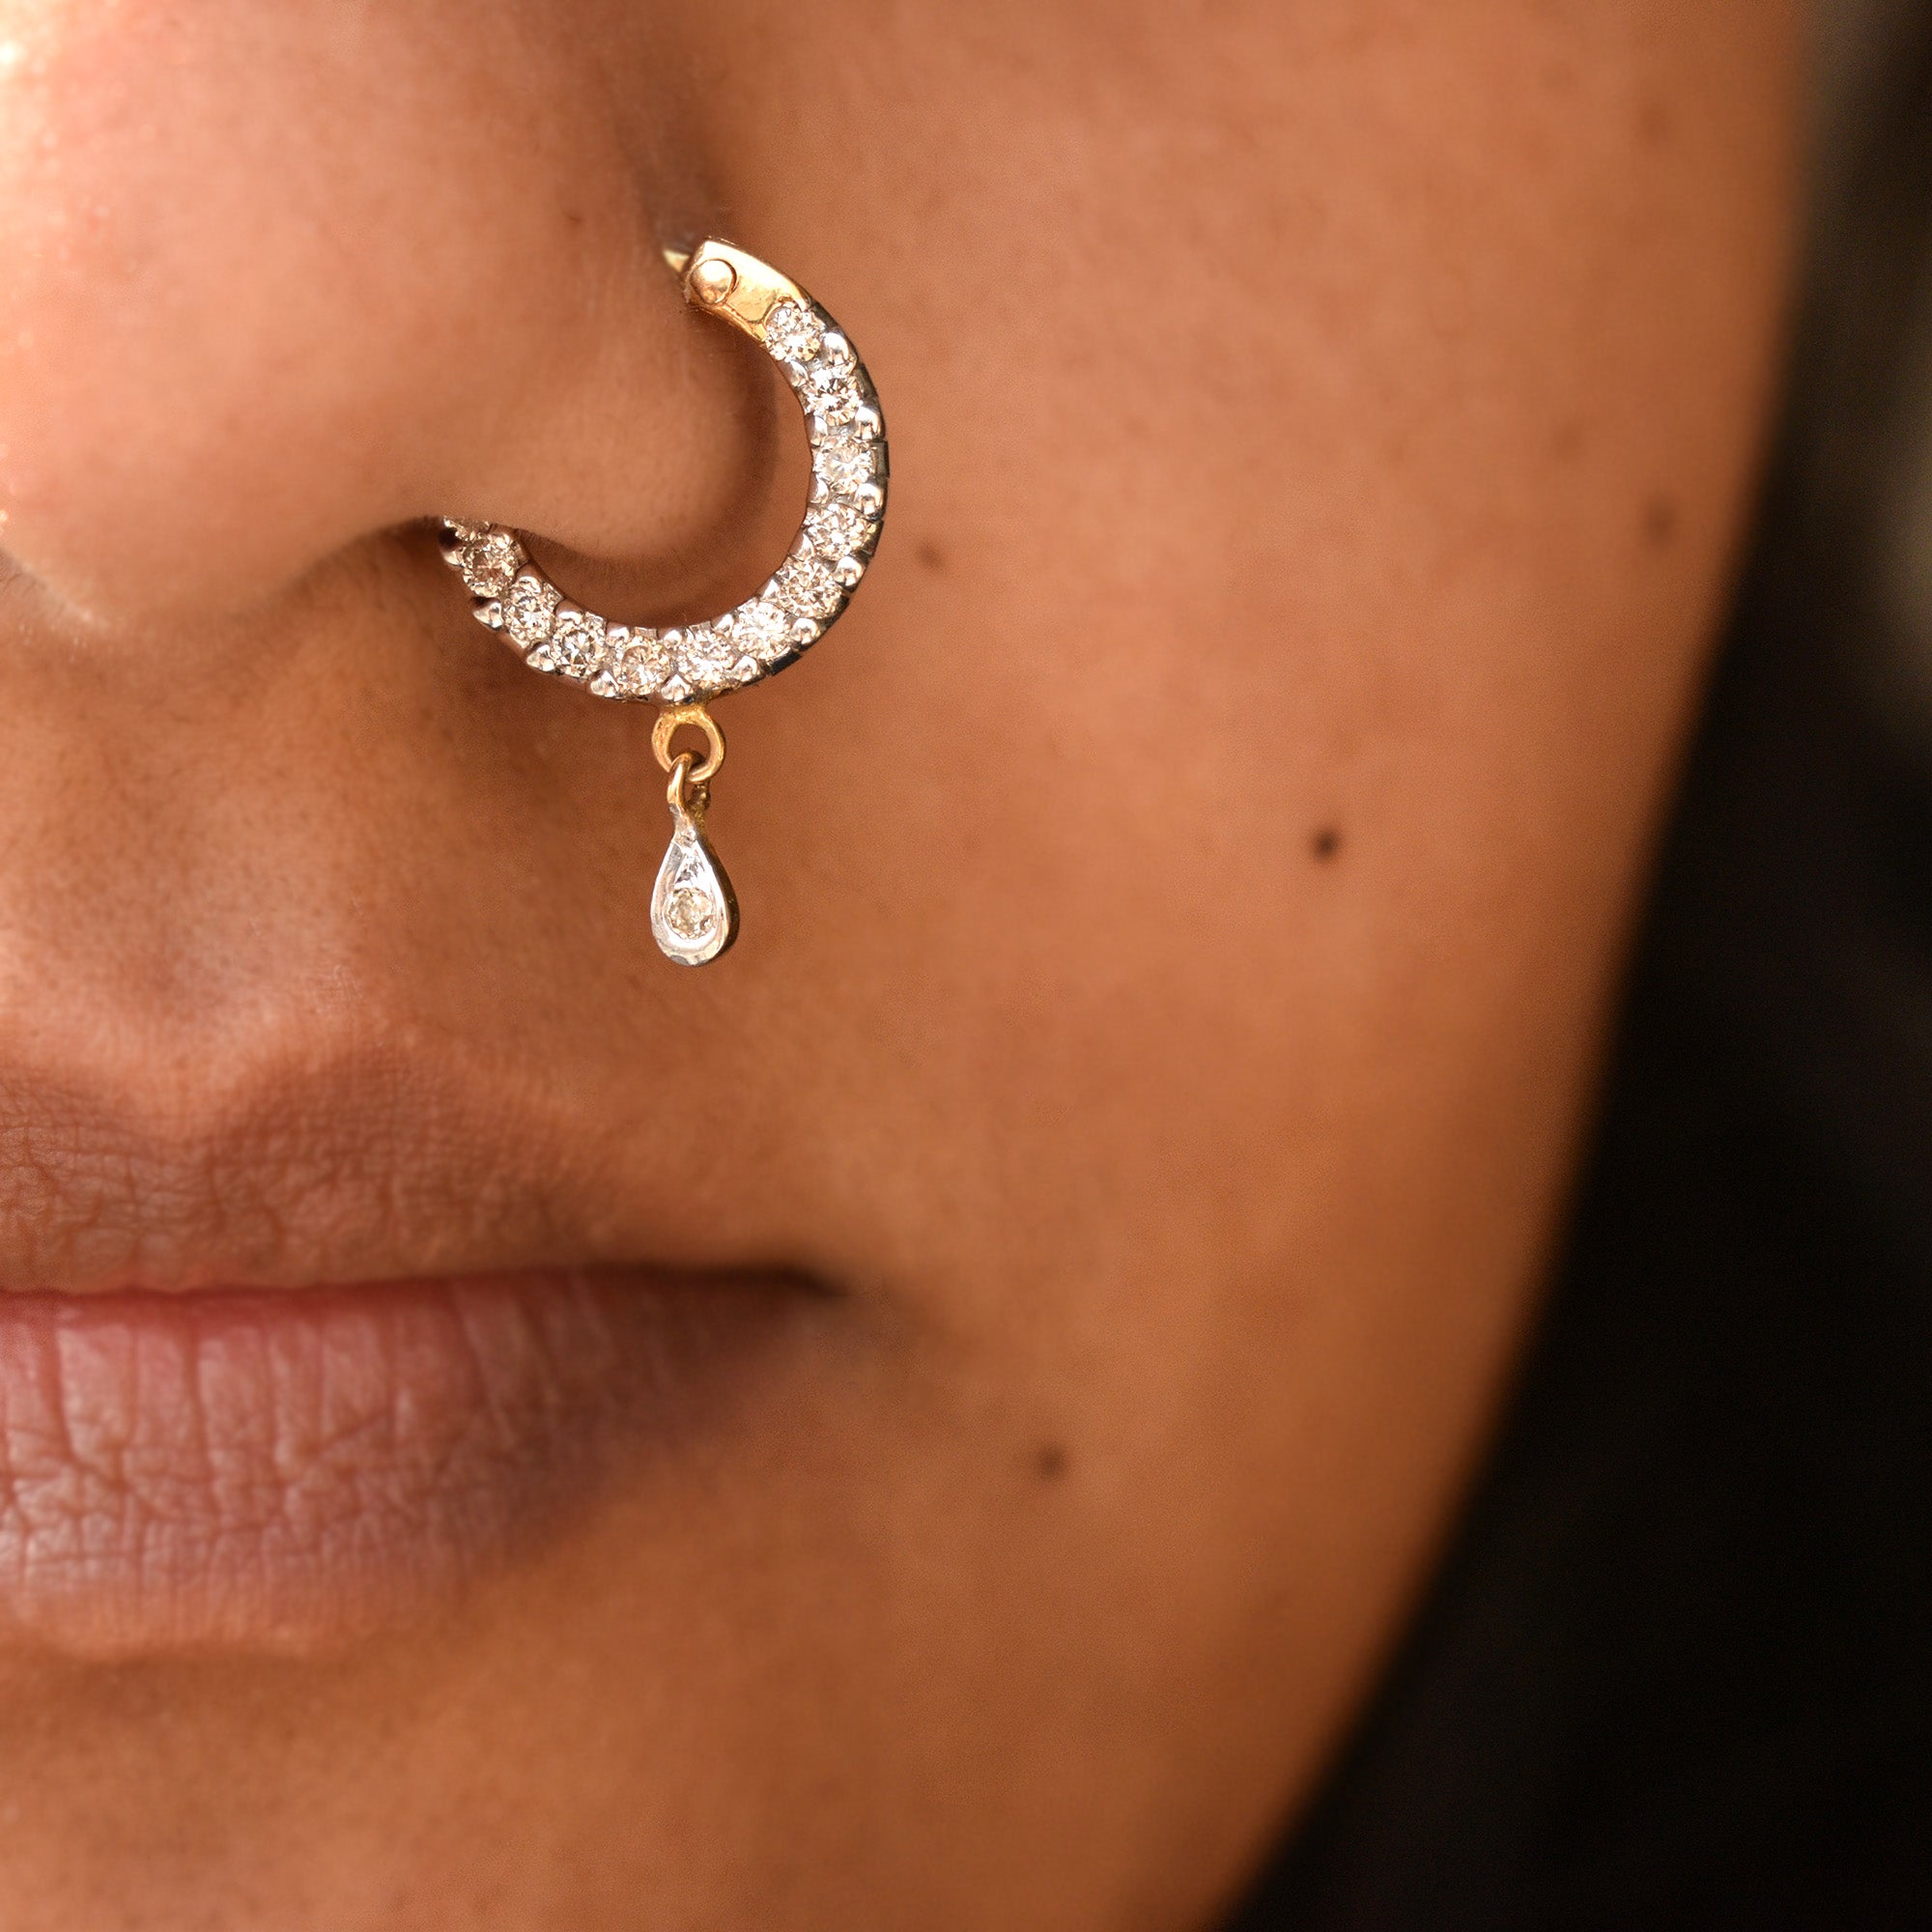 Buy Sliver Nose Ring and Pins Online | MohabyGeetanjali